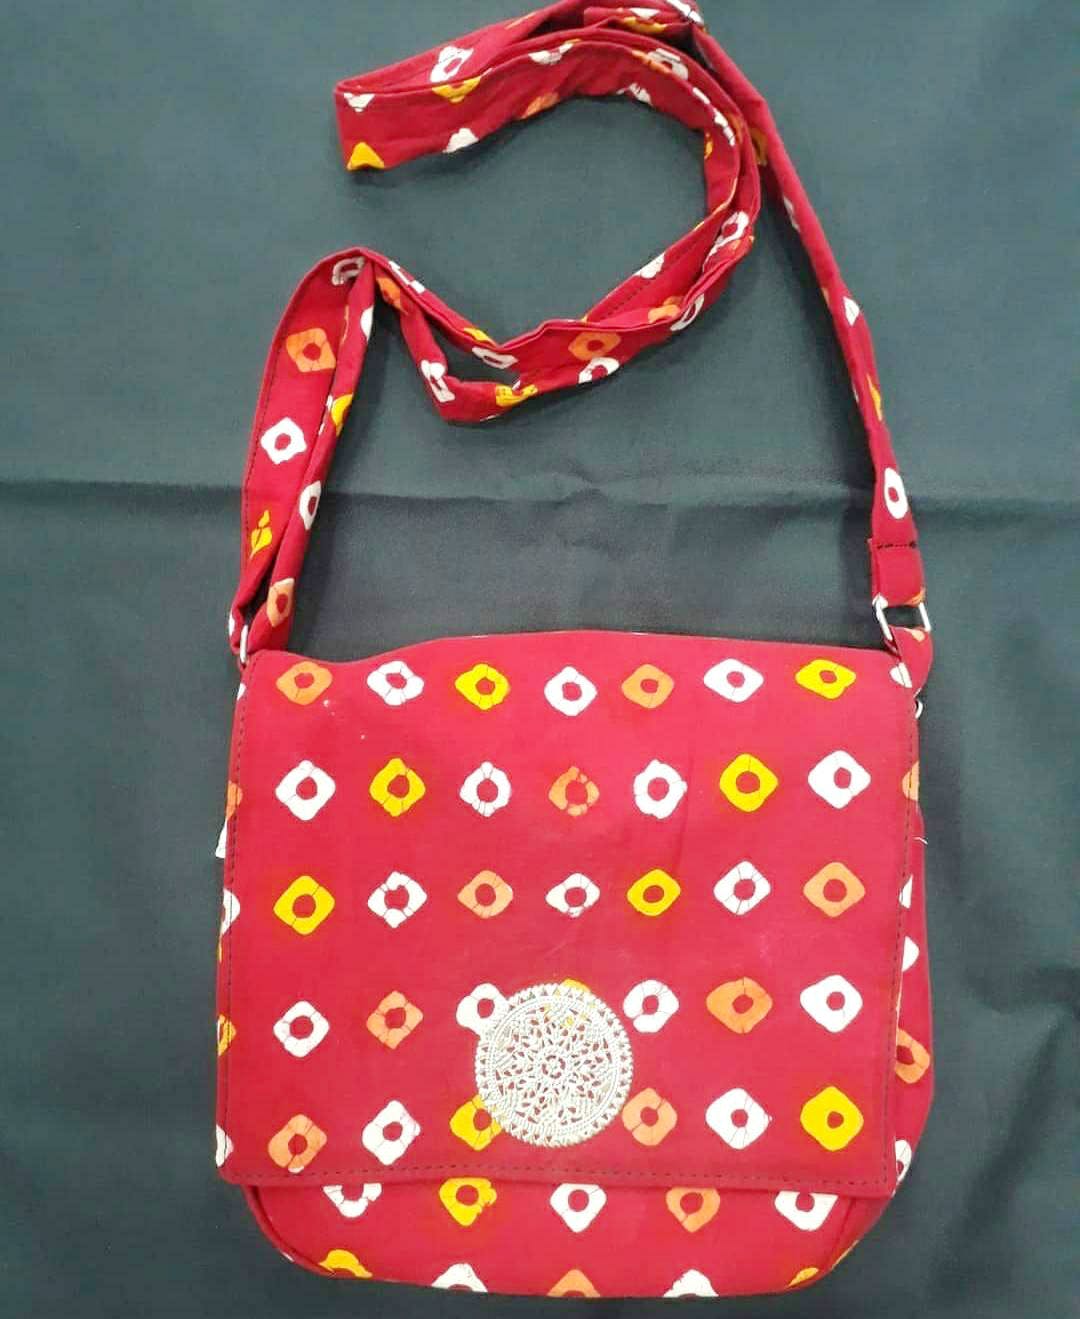 Bag,Handbag,Red,Product,Shoulder bag,Fashion accessory,Yellow,Pattern,Pattern,Design